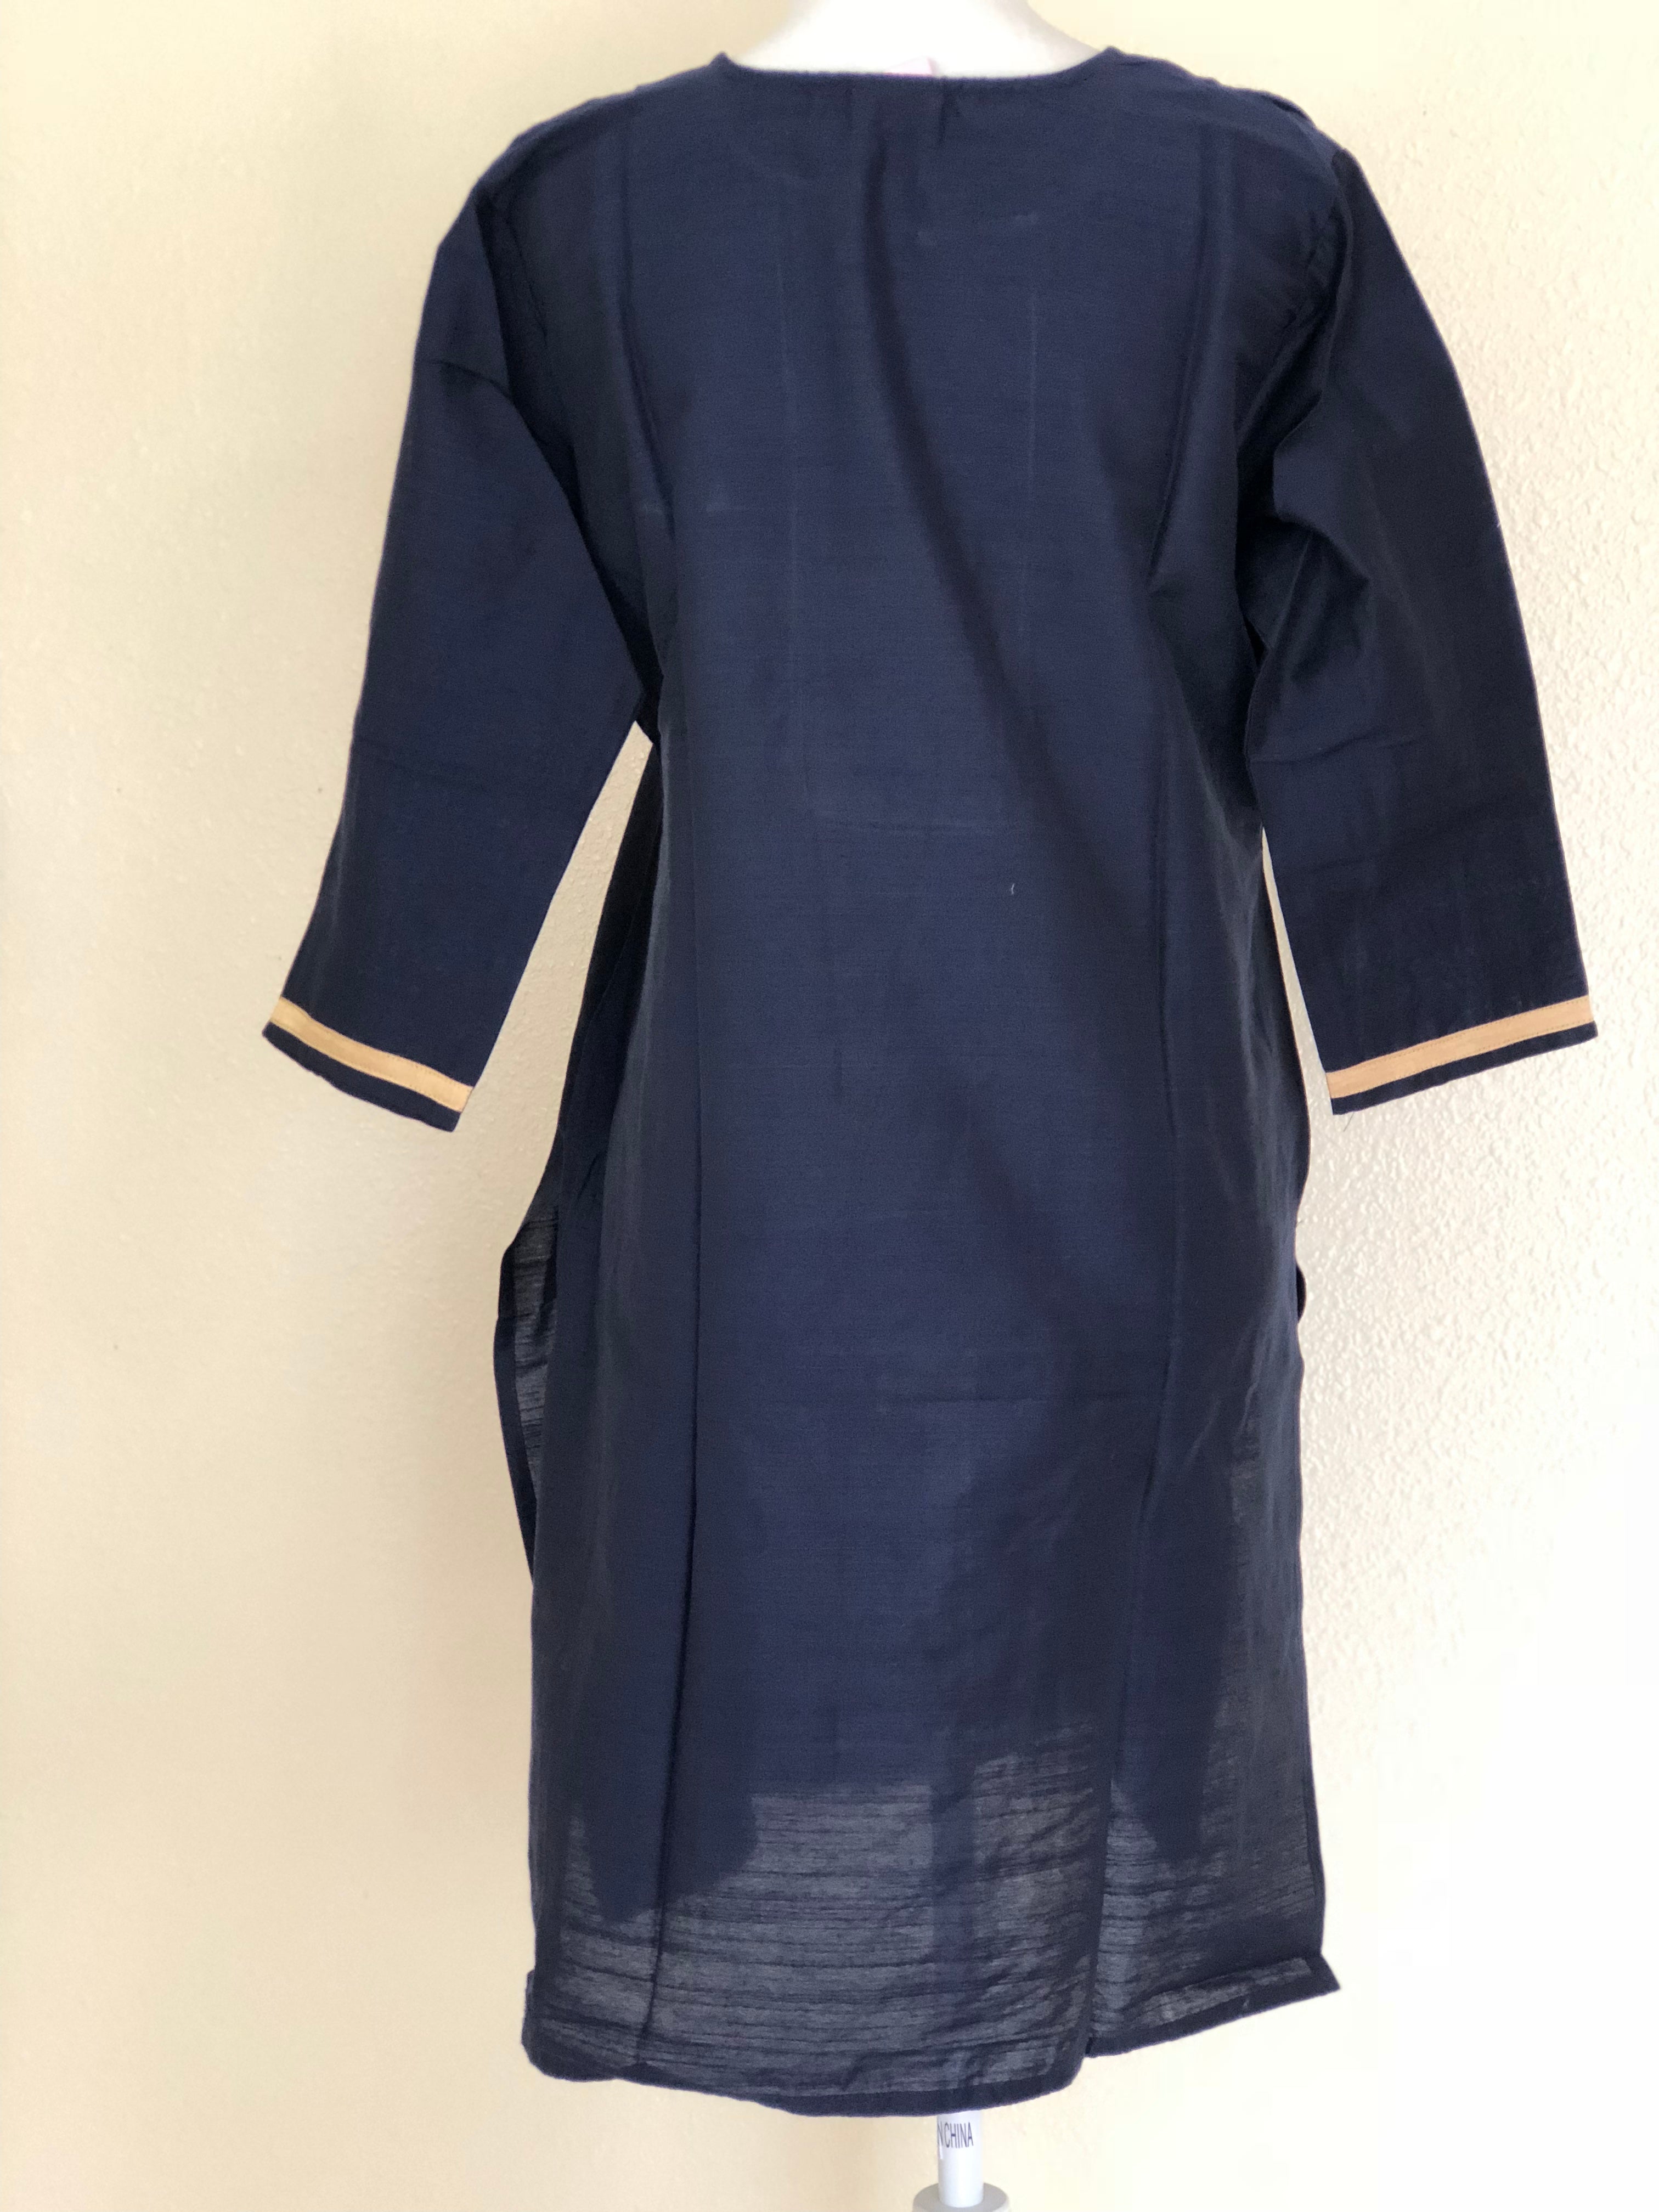 Navy Blue Color - Raw Silk Kurti Size Small/Medium - 30/32 Junior size. Big Girls size - 18 plus